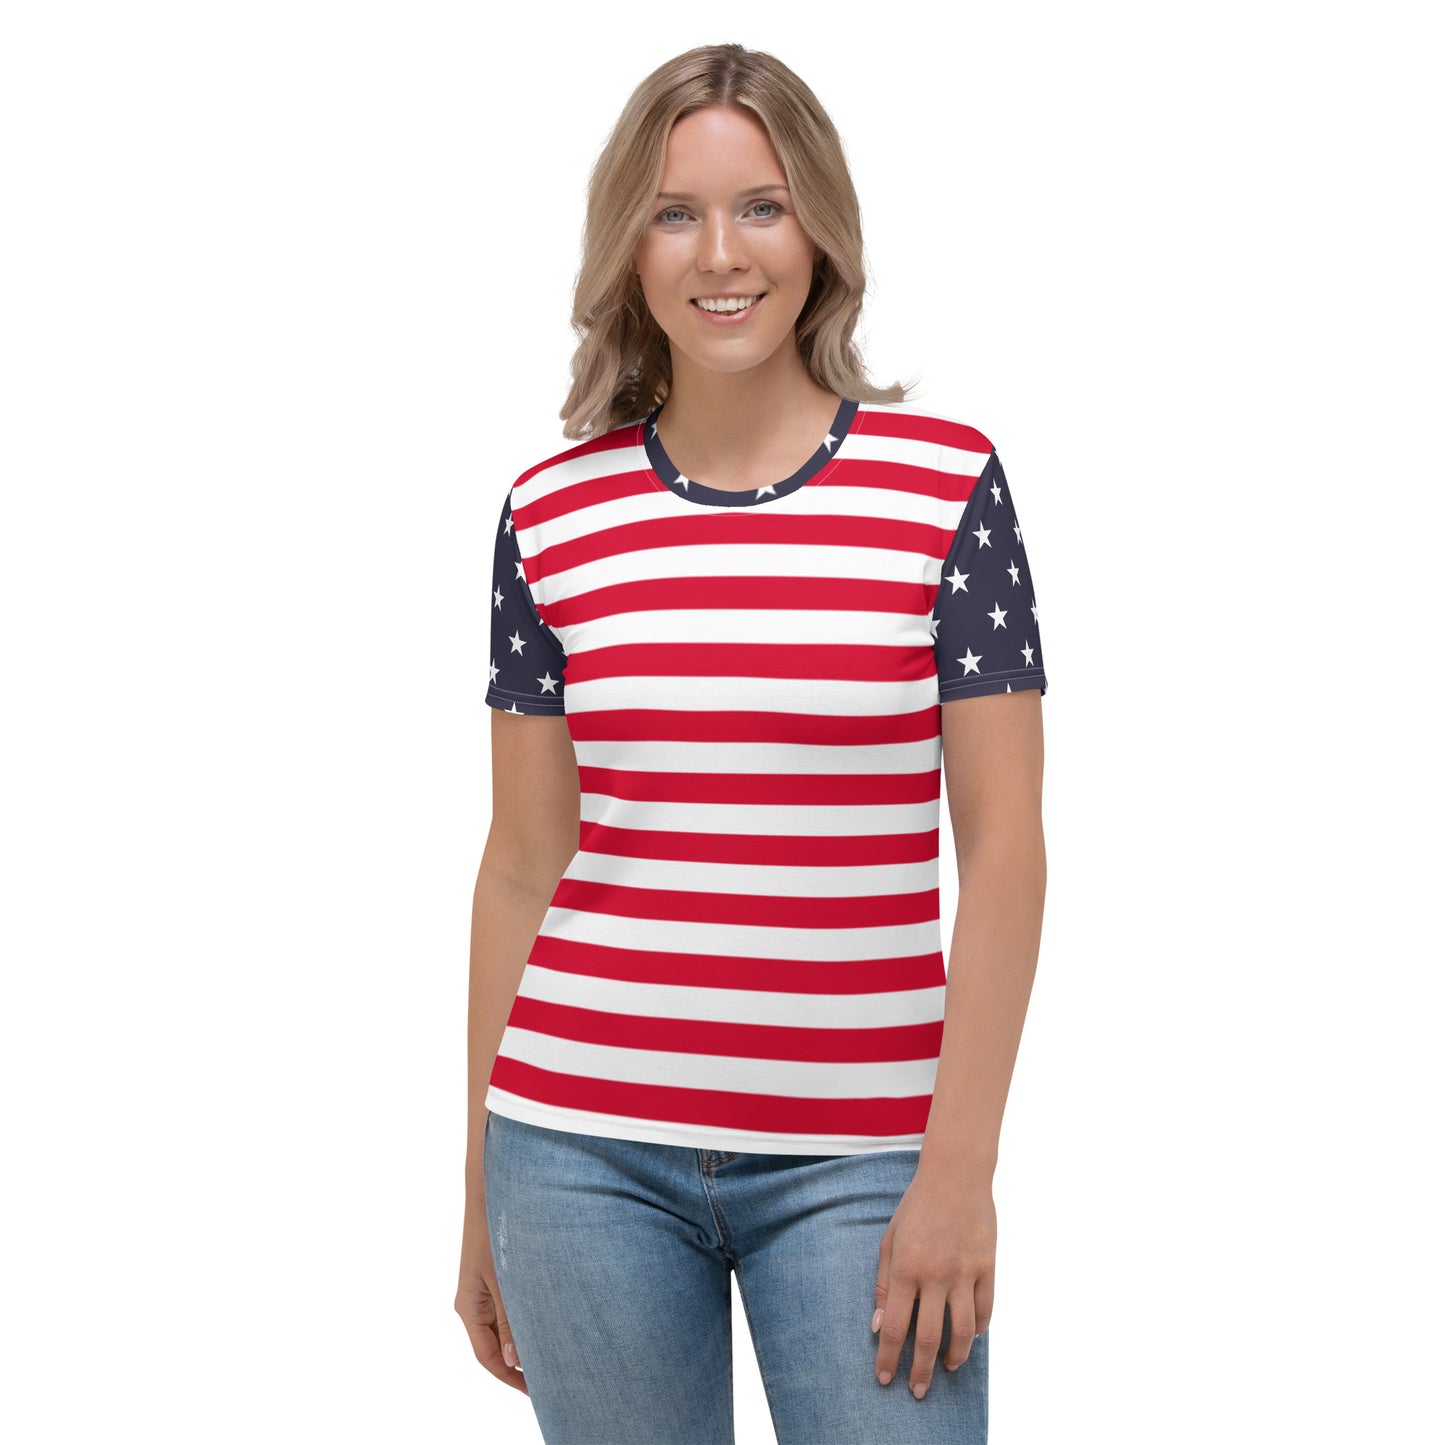  American Flag Shirt Women 4th of July Patriotic T